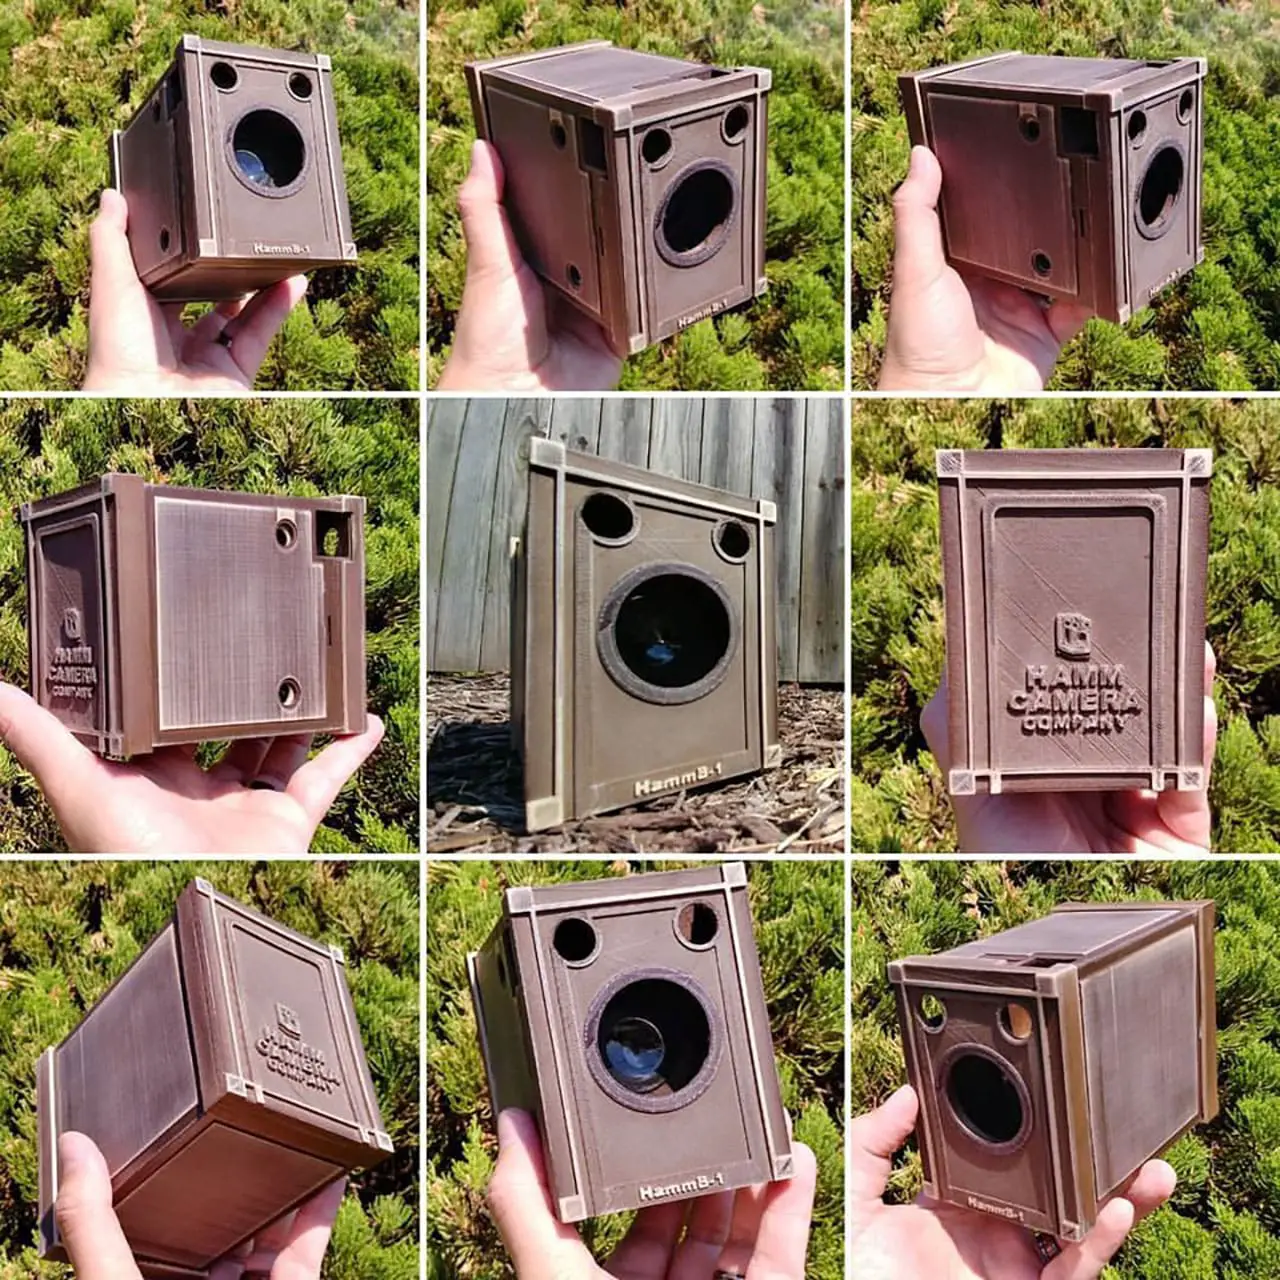 Camera geekery: “Hammcamm” Box Camera